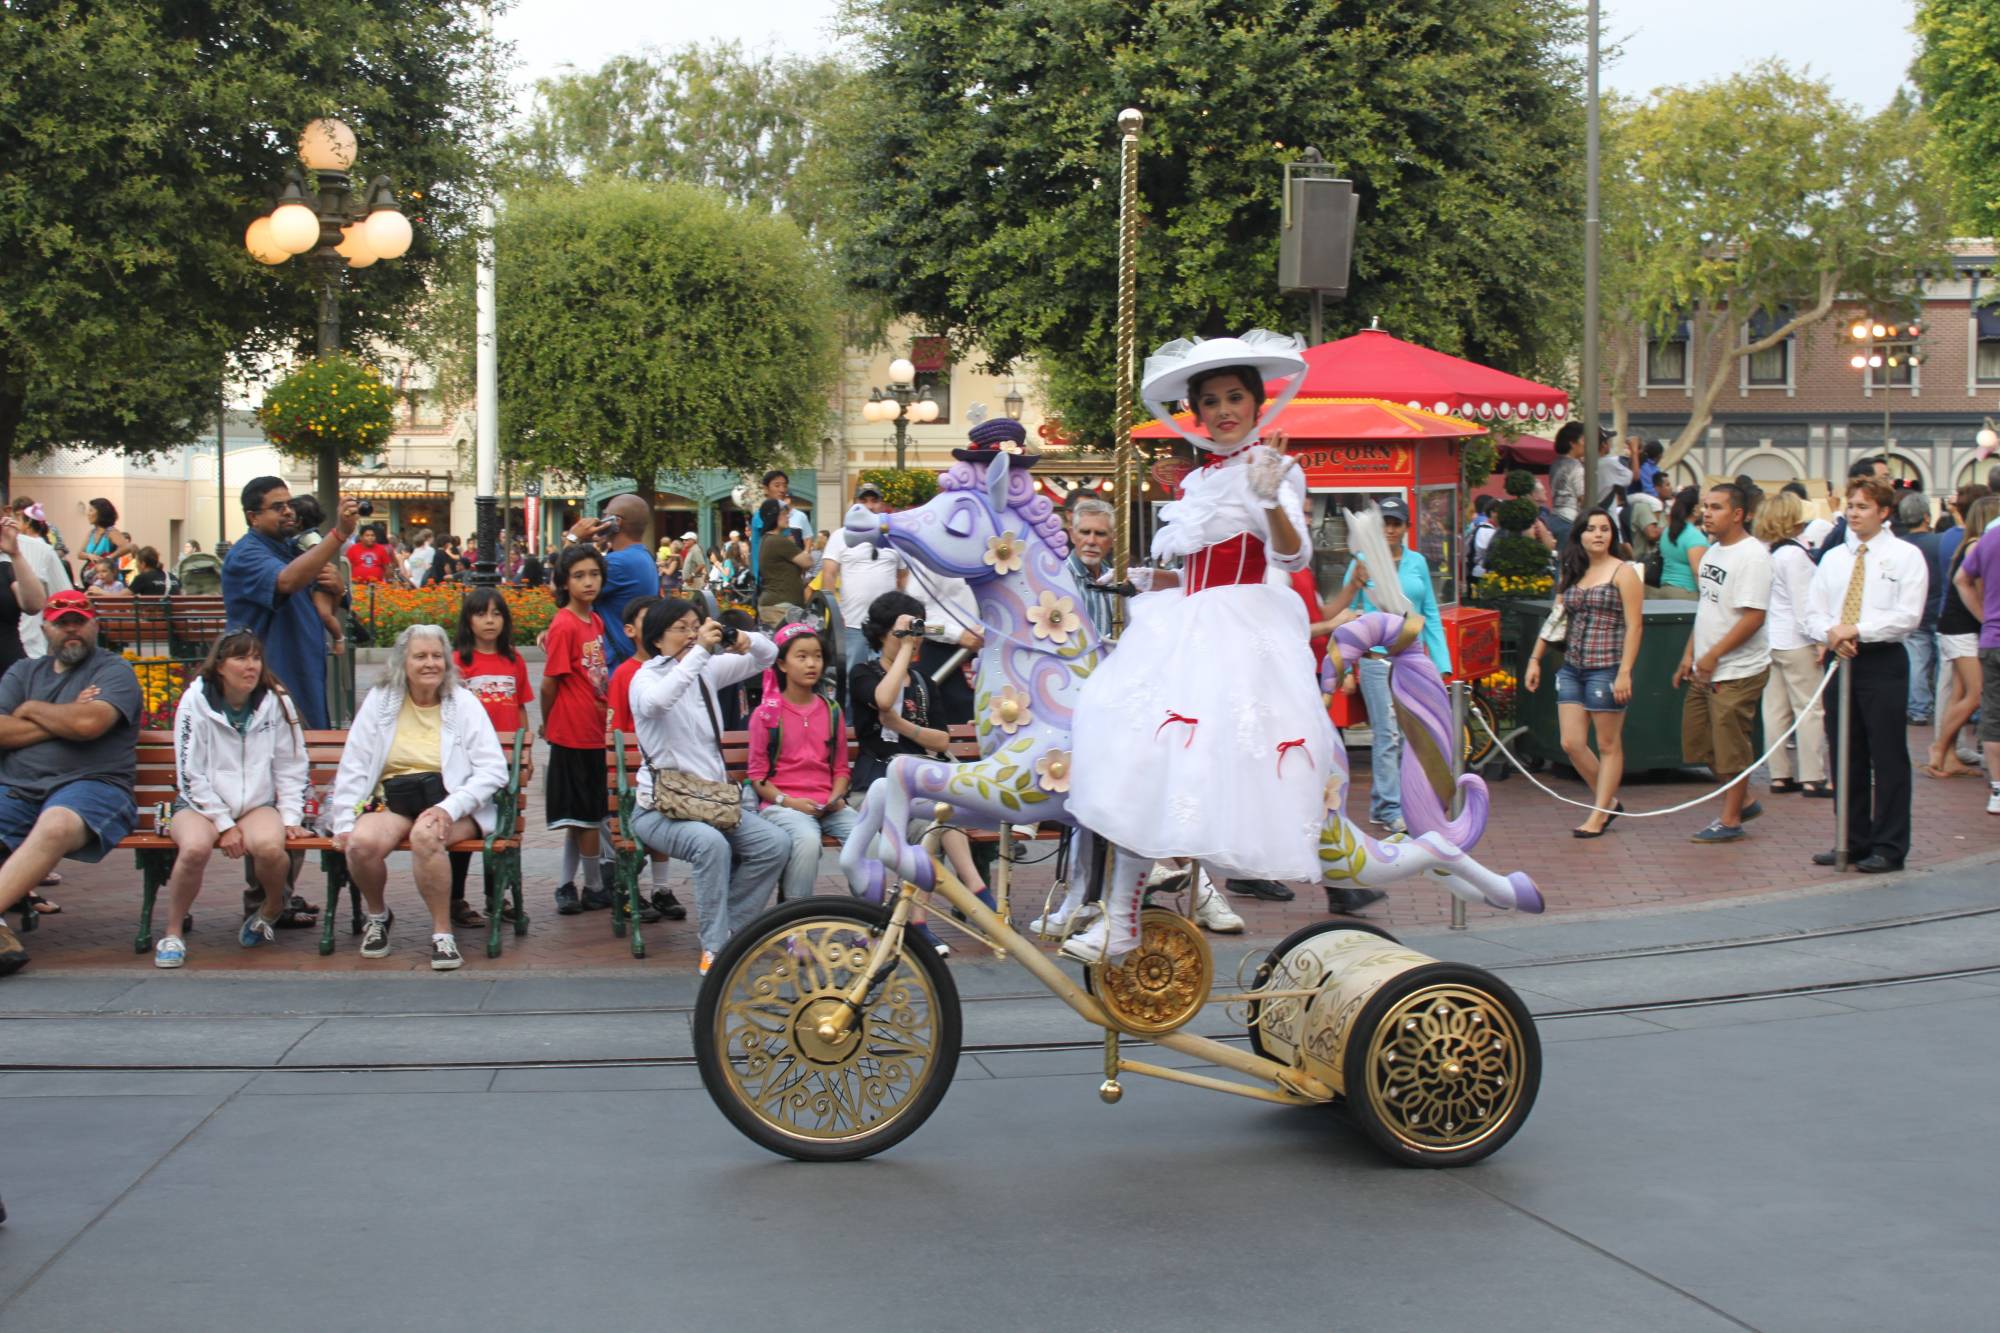 Disneyland - SoundSational Parade - Mary Poppins